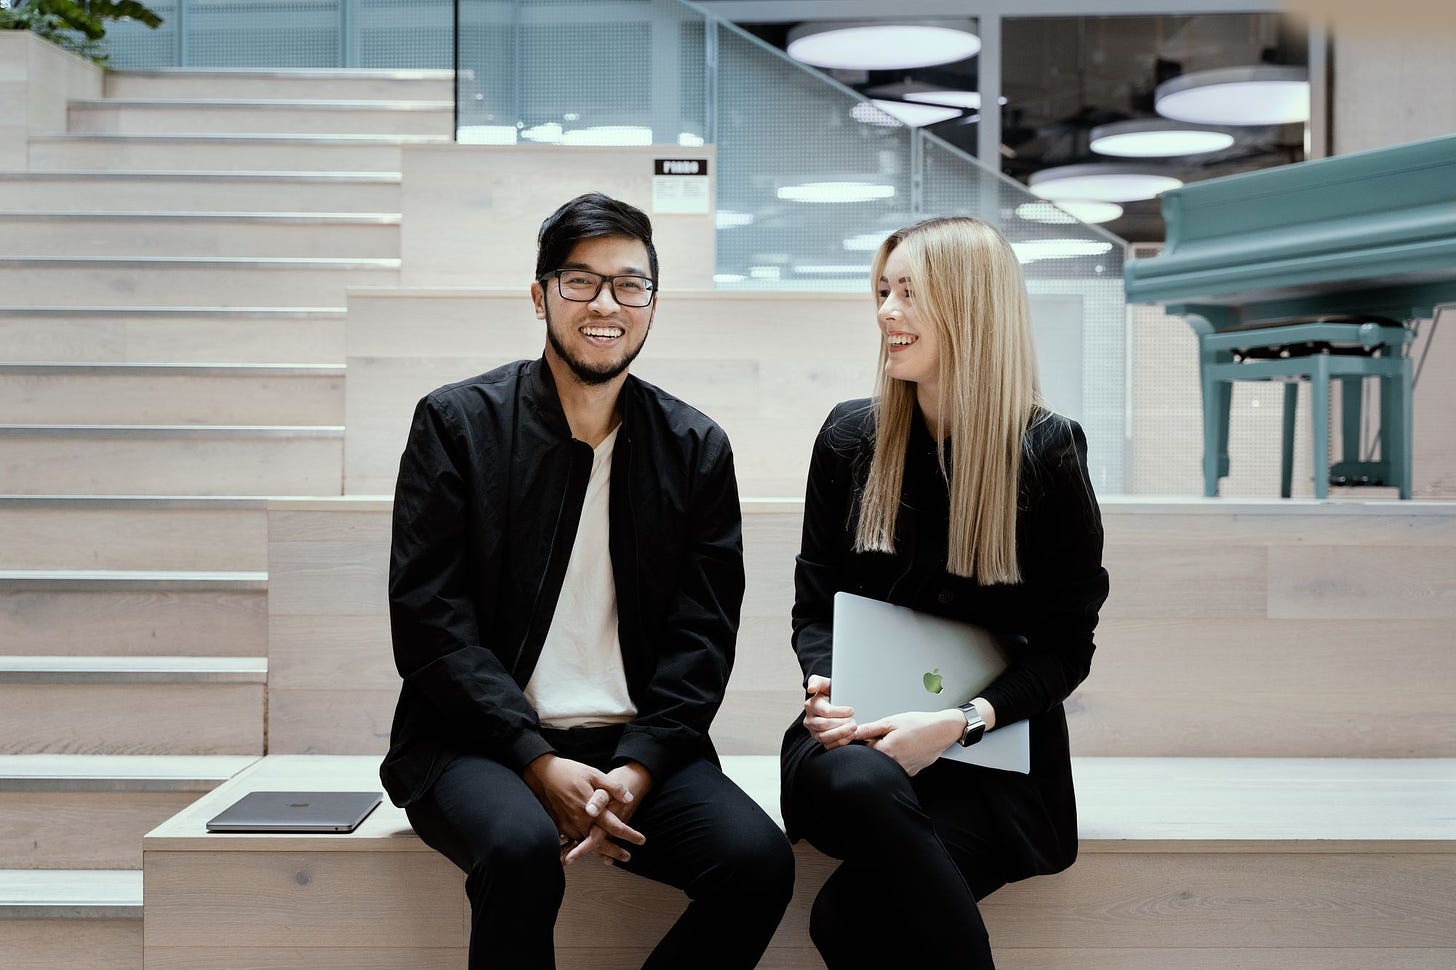 Talkbase co-founders Klara Losert and Roman Nguyen sitting and smiling